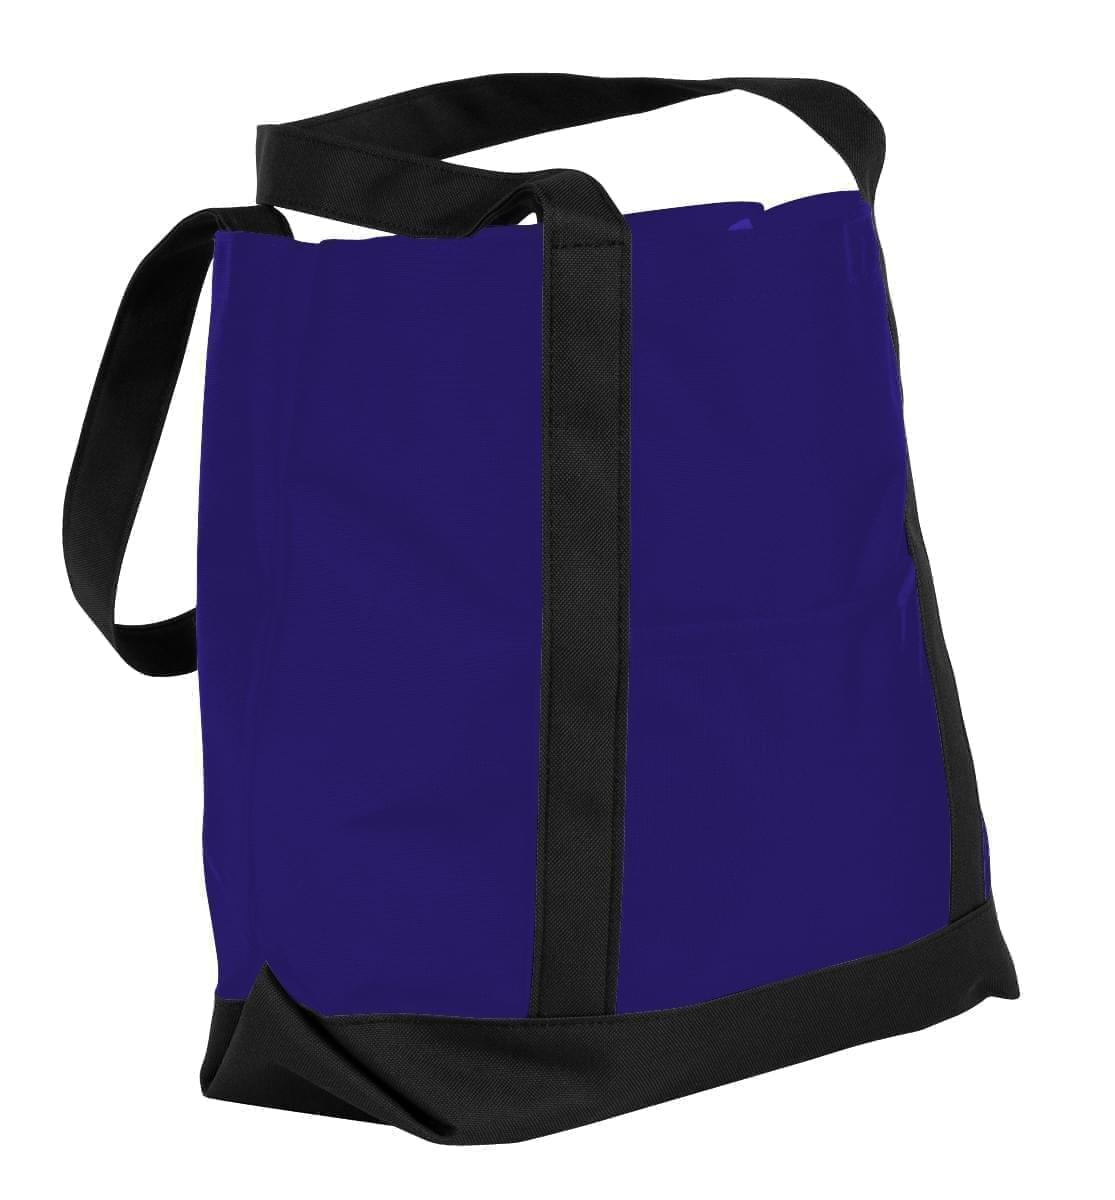 USA Made Nylon Poly Boat Tote Bags, Purple-Black, XAACL1UAYC